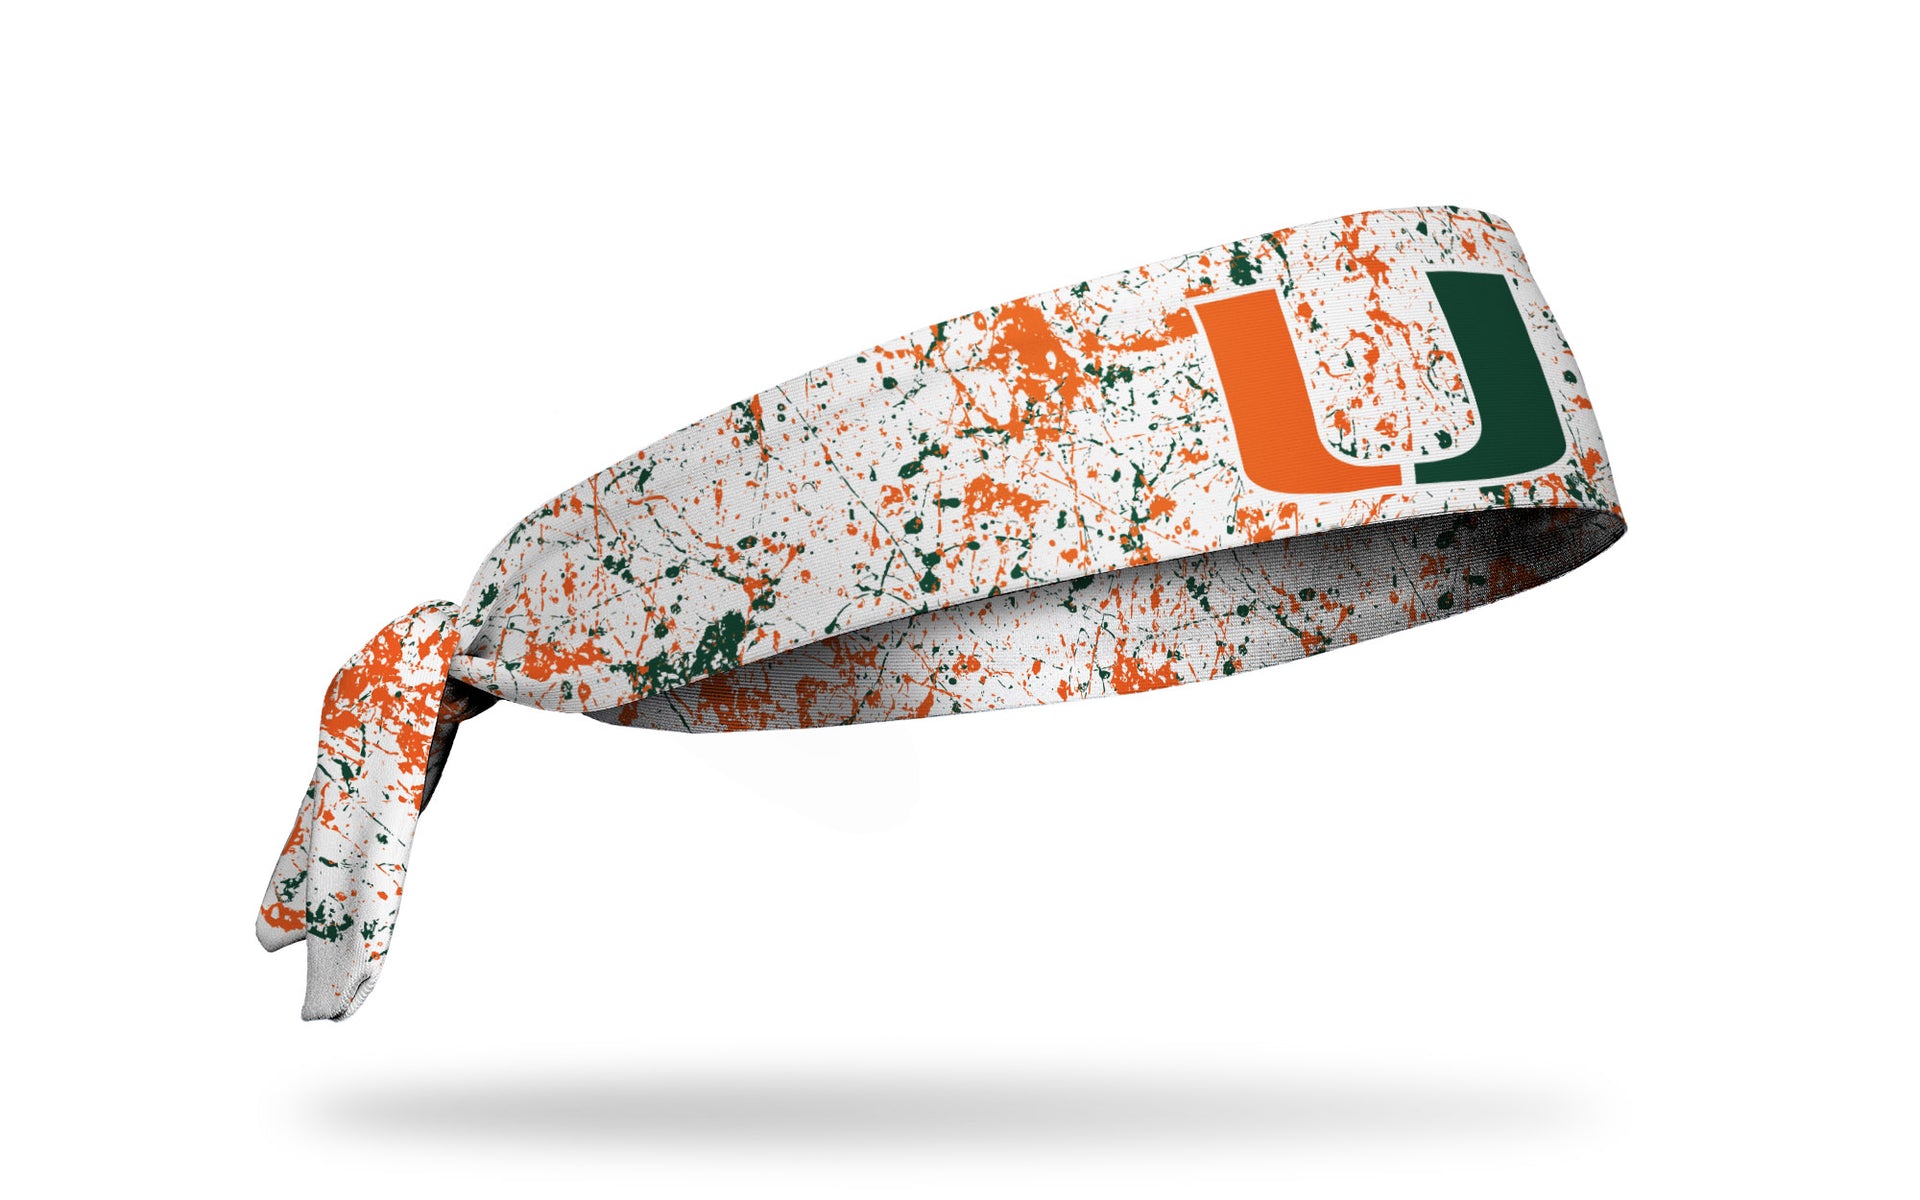 University of Miami white headband with orange and green paint splatter